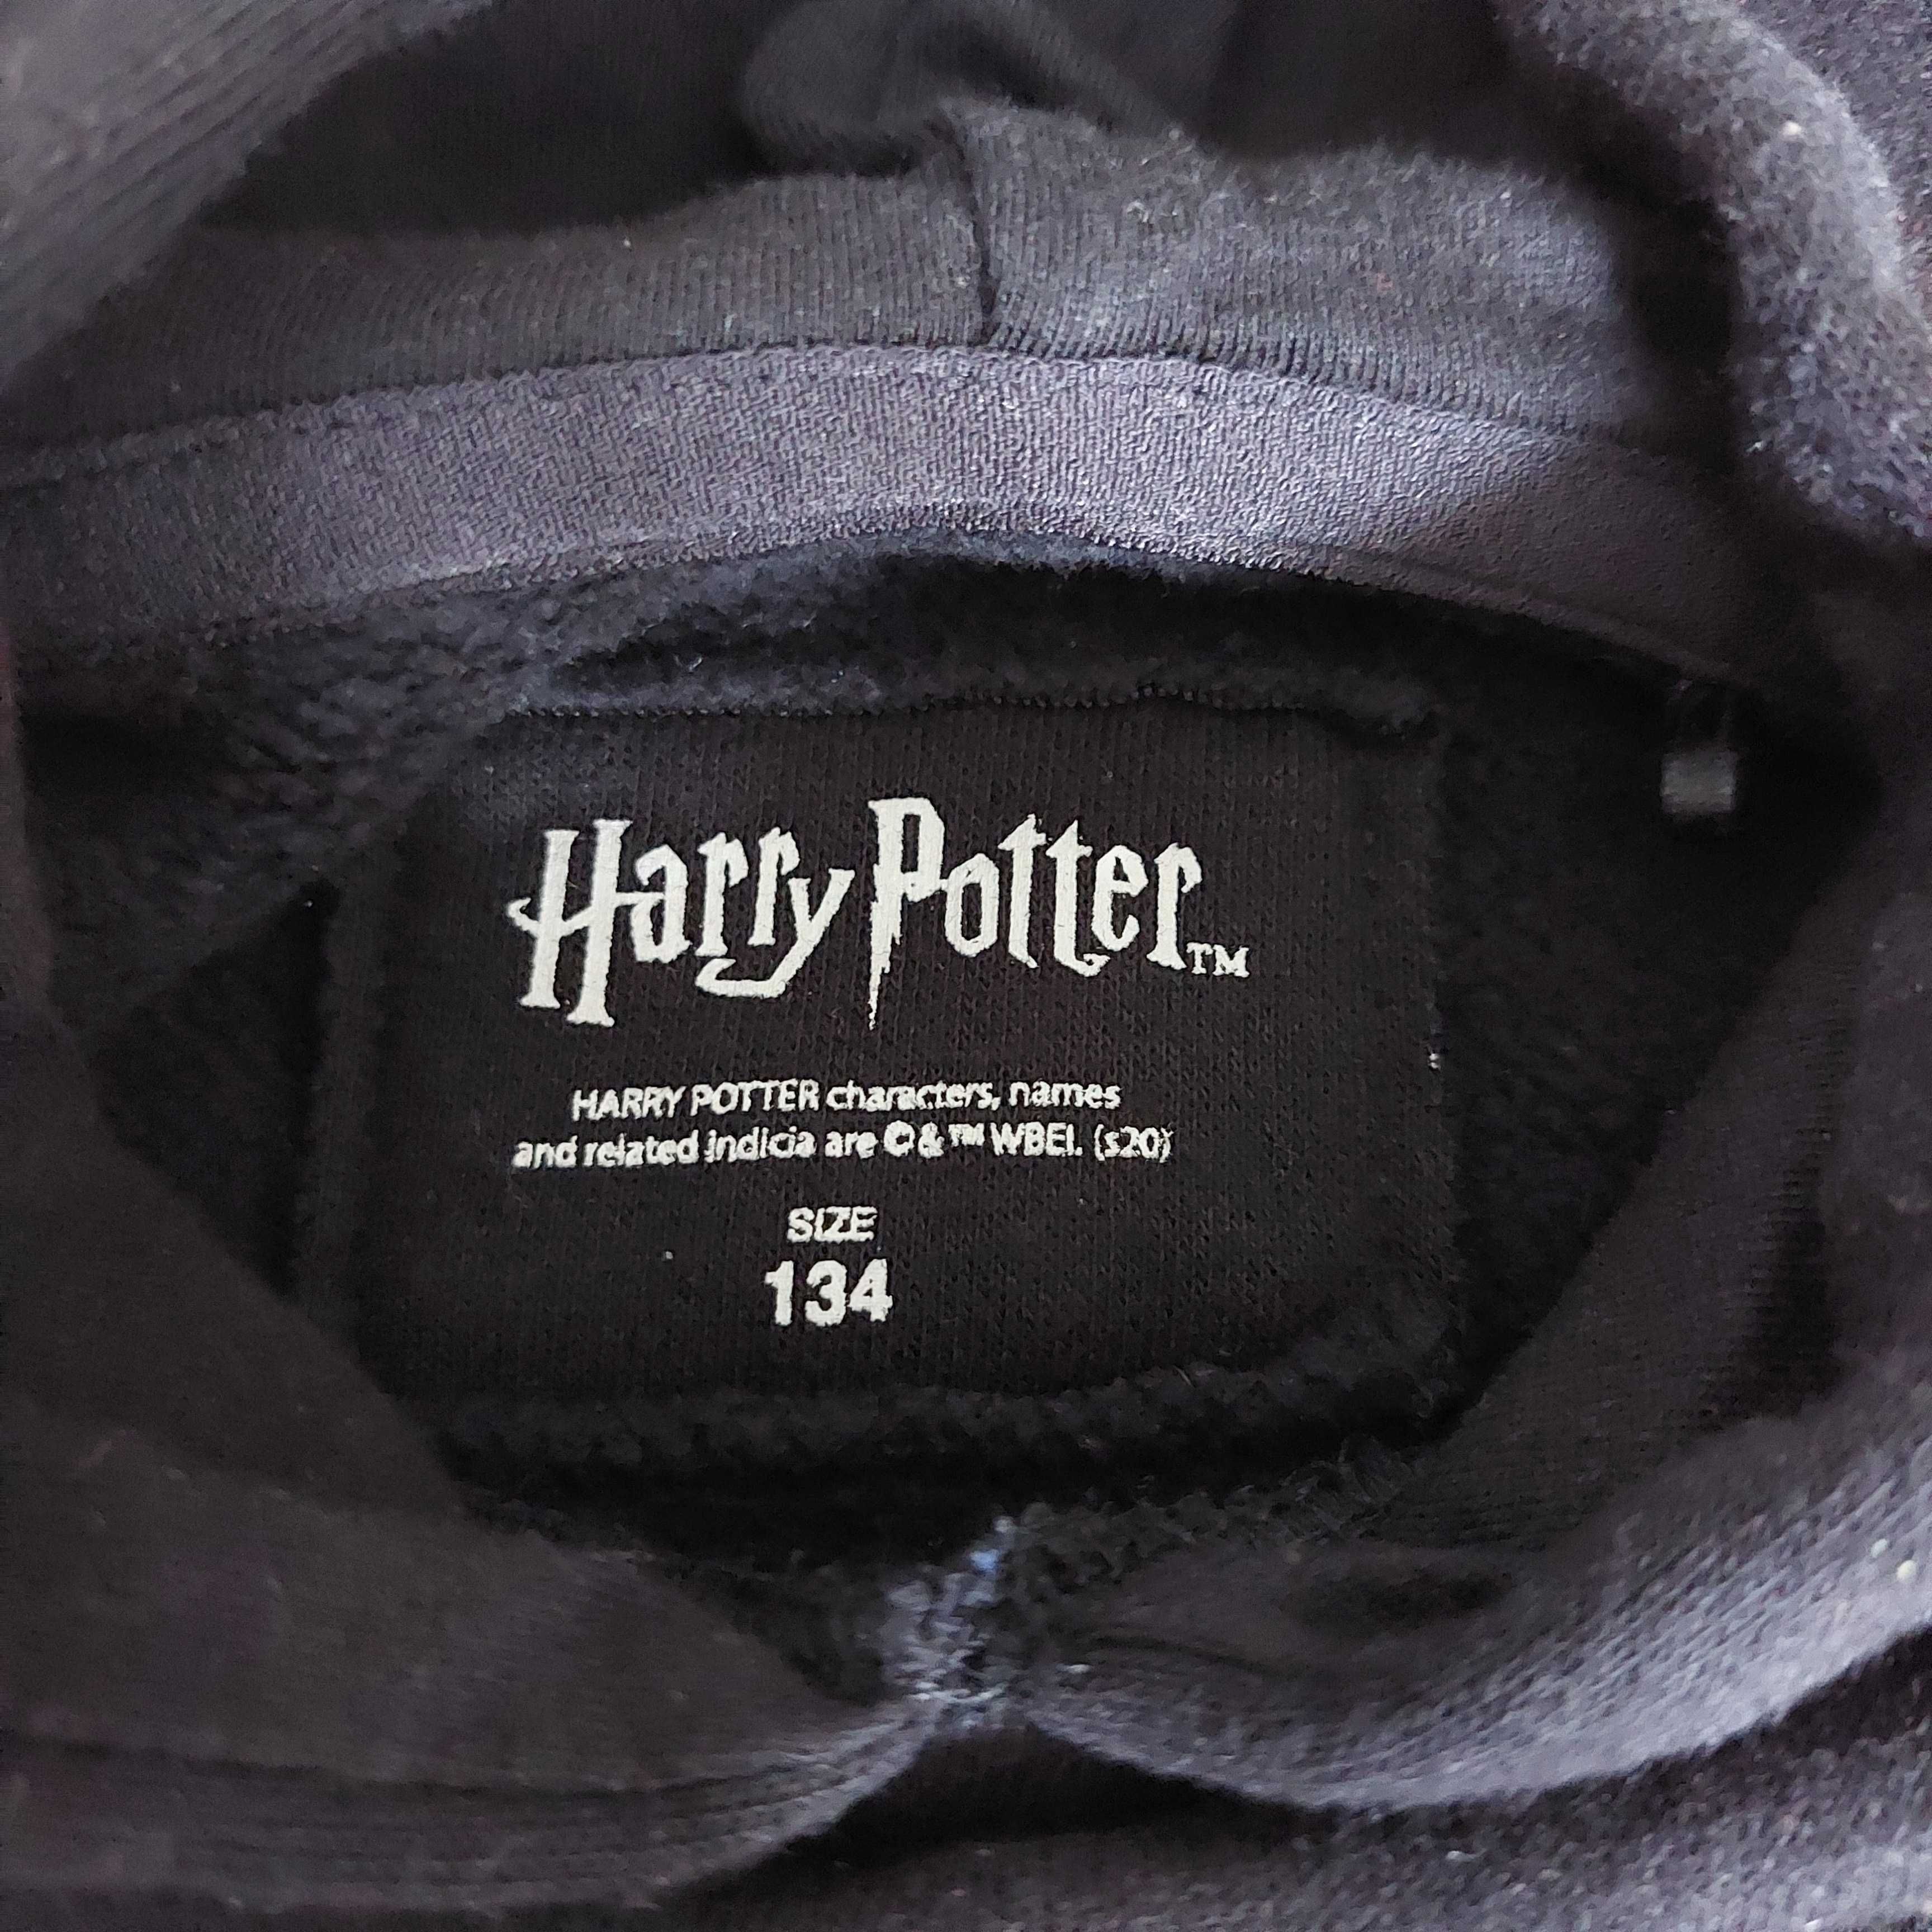 Bluza Harry Potter spodnie legginsy rozm. 134 plus gratis